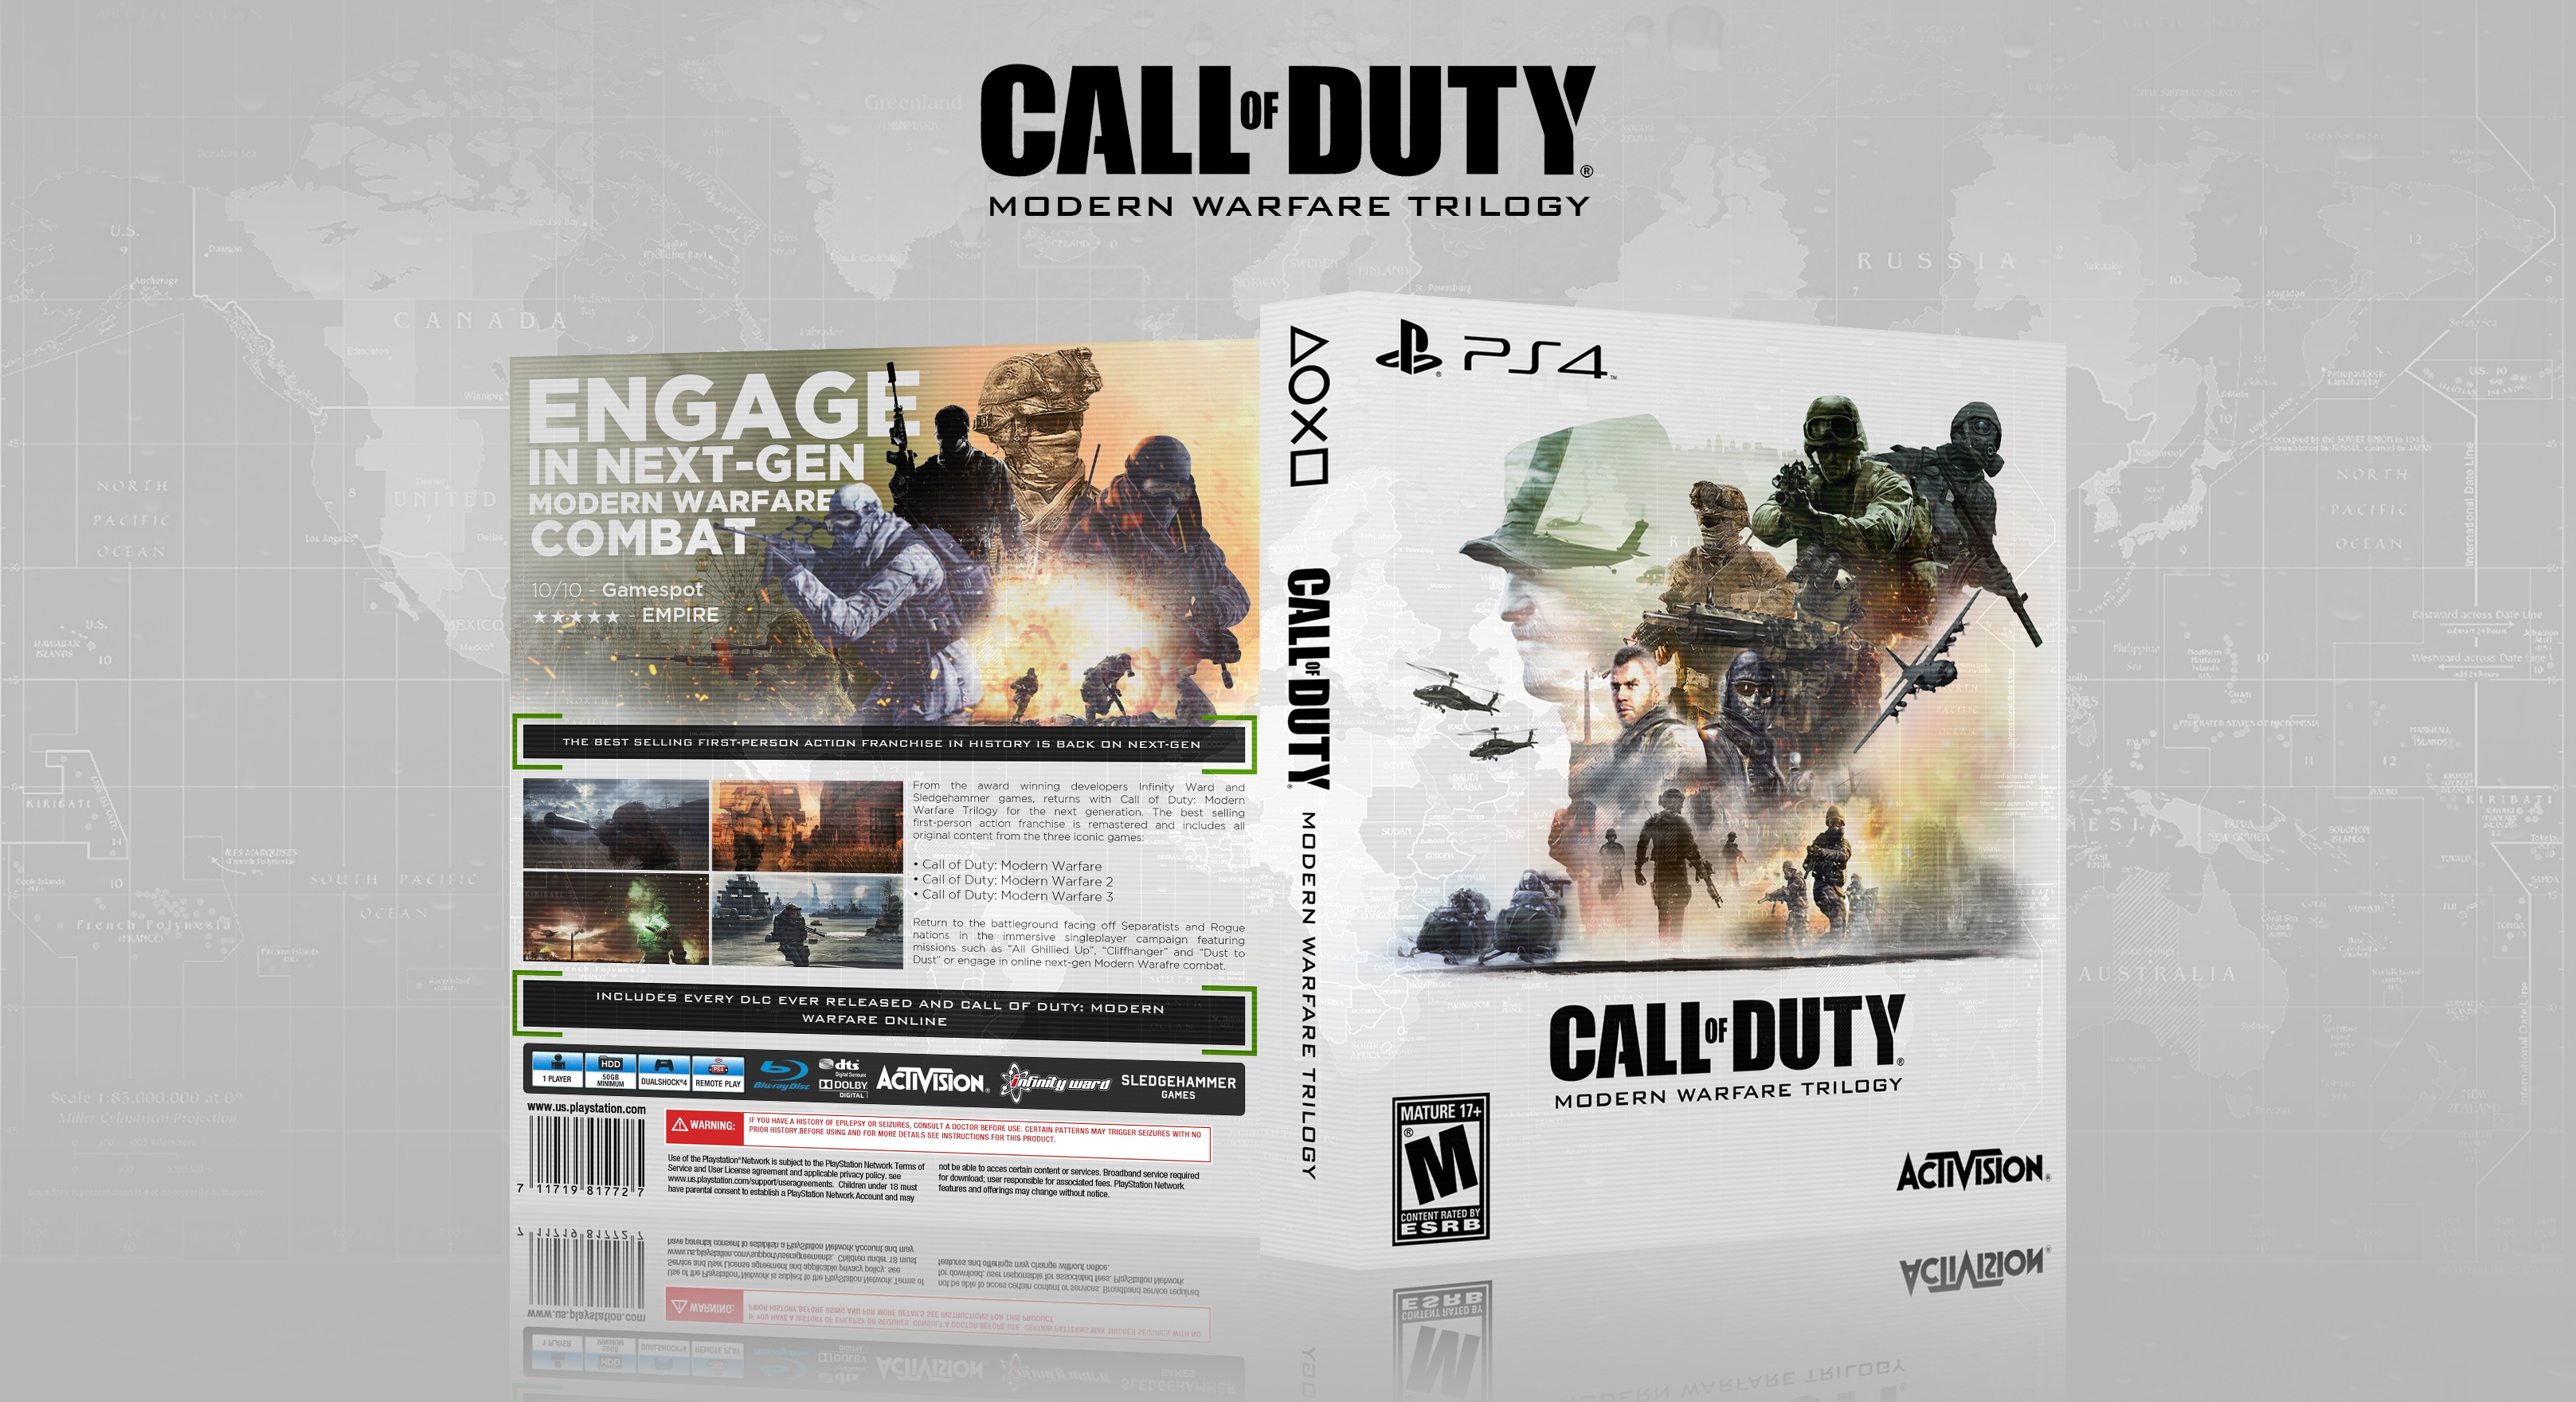 Call of Duty: Modern Warfare Trilogy box cover